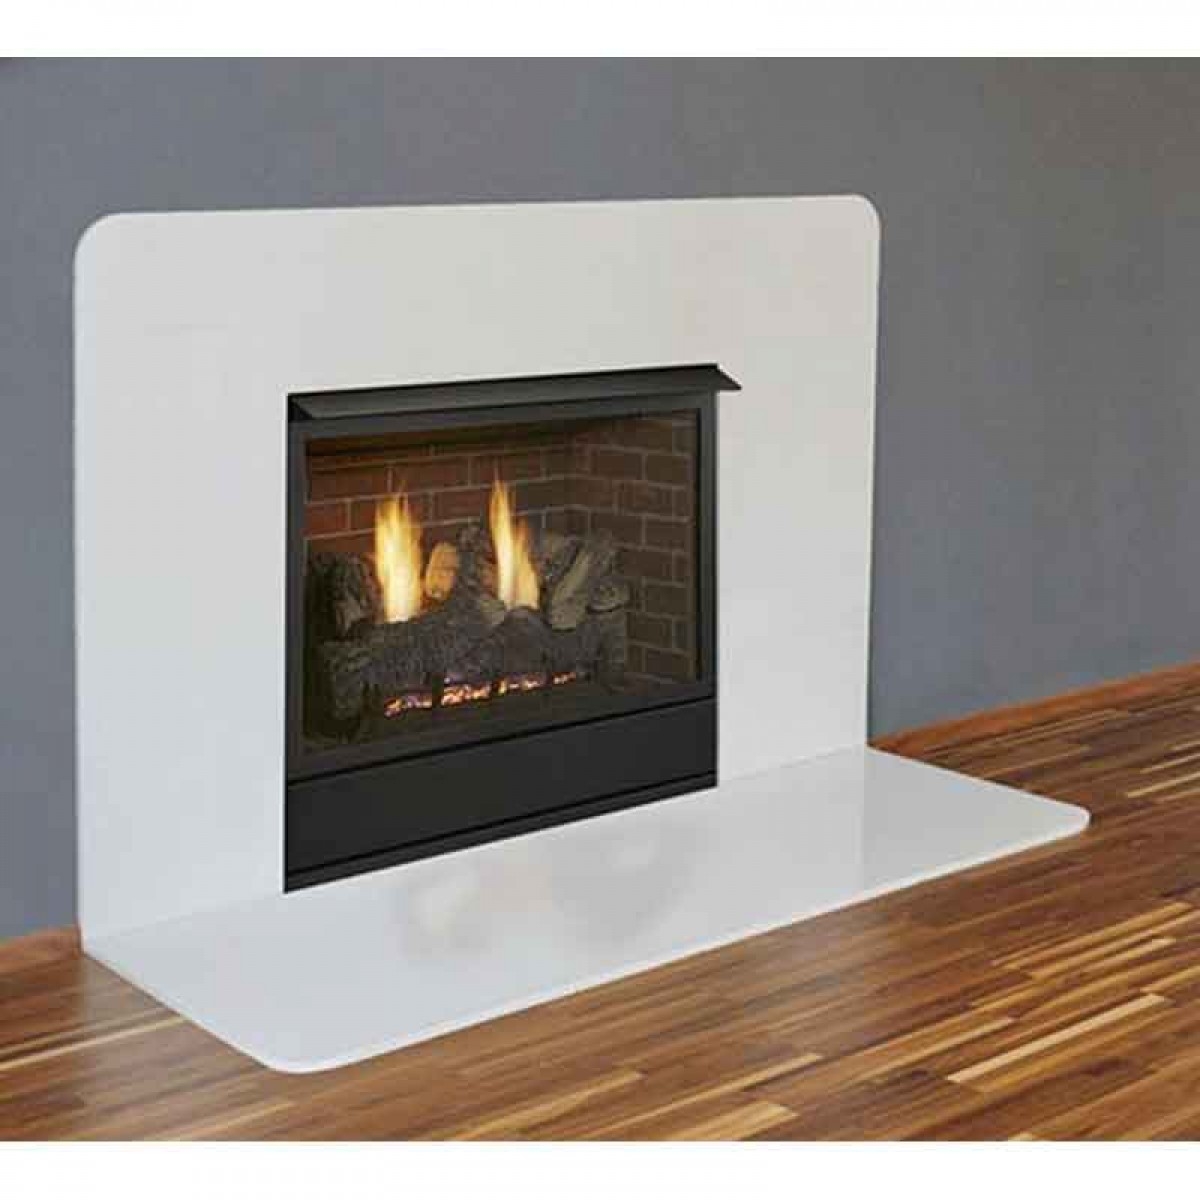 Magikflame Fireplace Inspirational Fireplaces Home Decor – Home Office Ideas